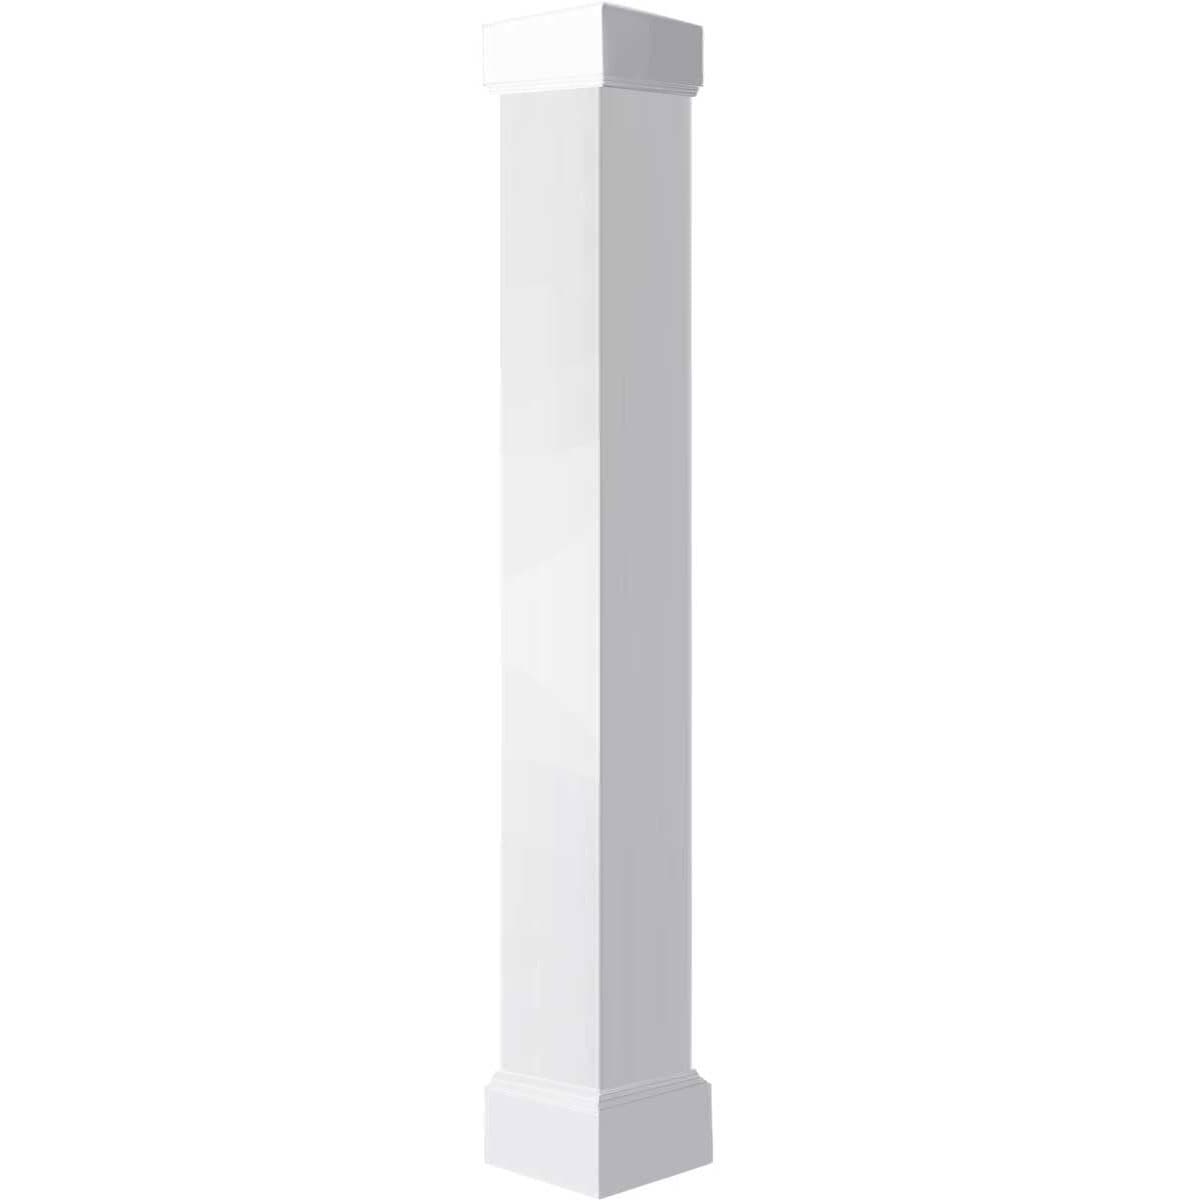 Pole-Wrap Columns & Accessories at